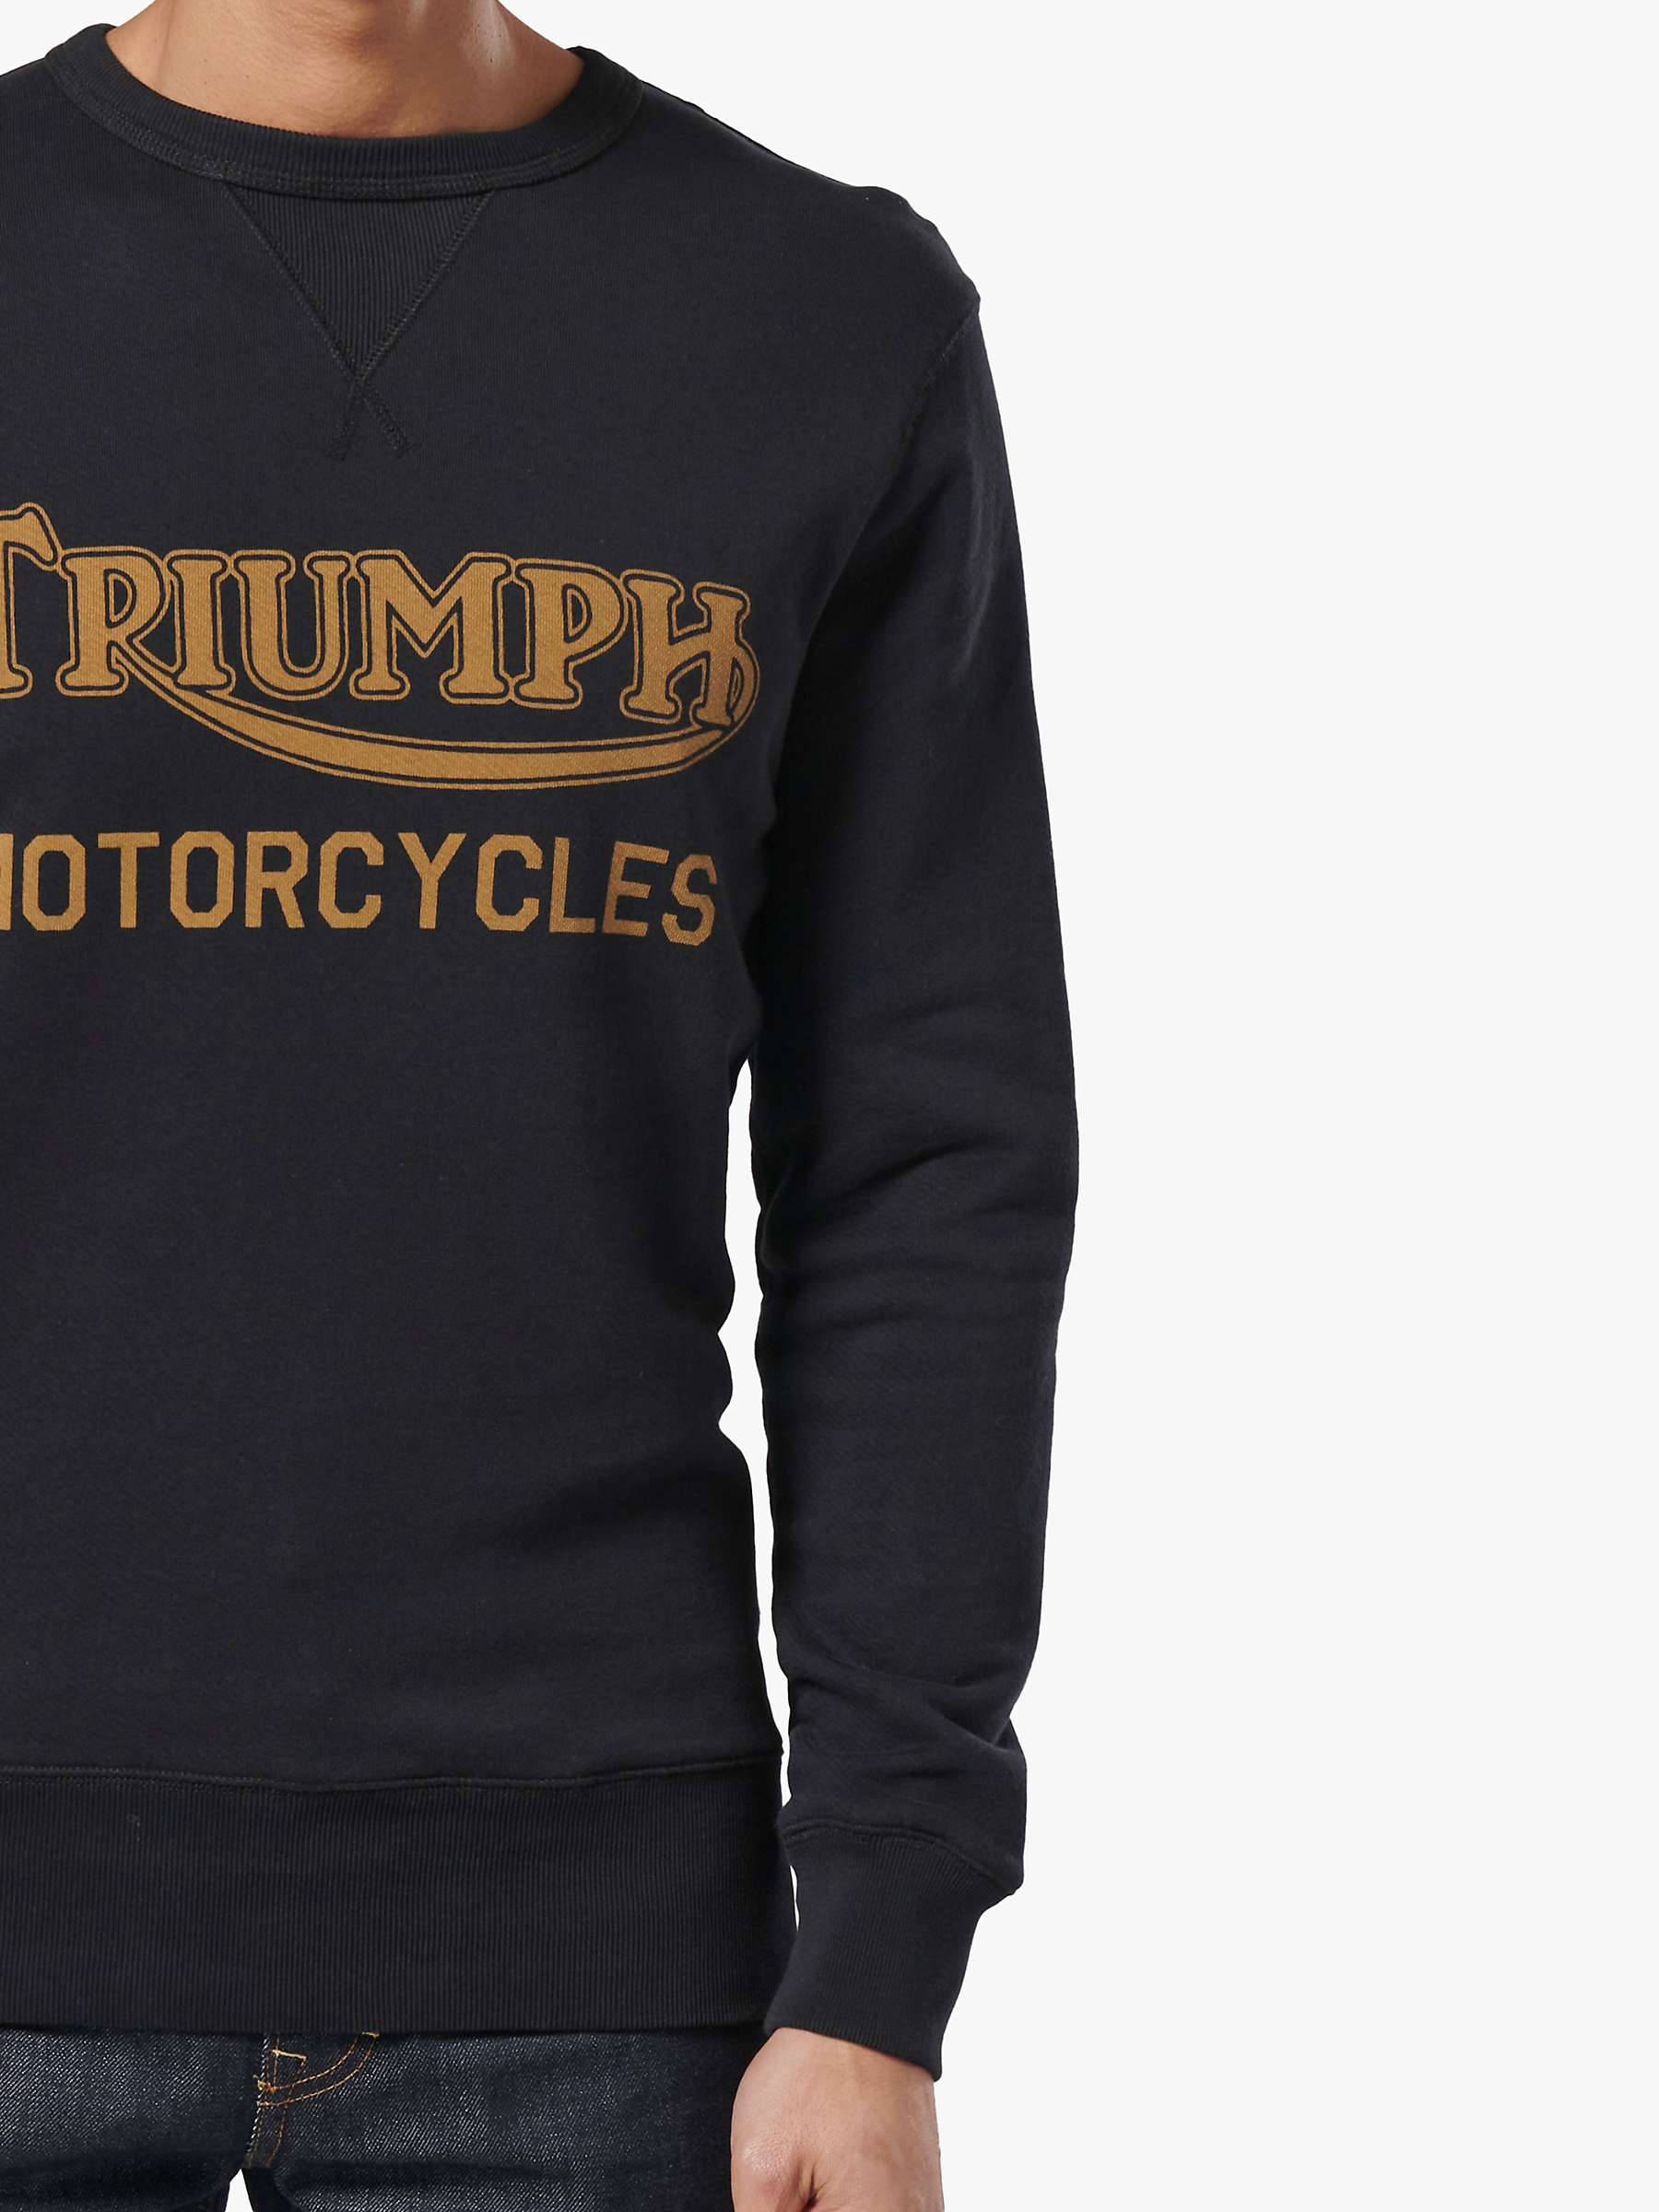 Buy Triumph Motorcycles Radial Sweatshirt Online at johnlewis.com